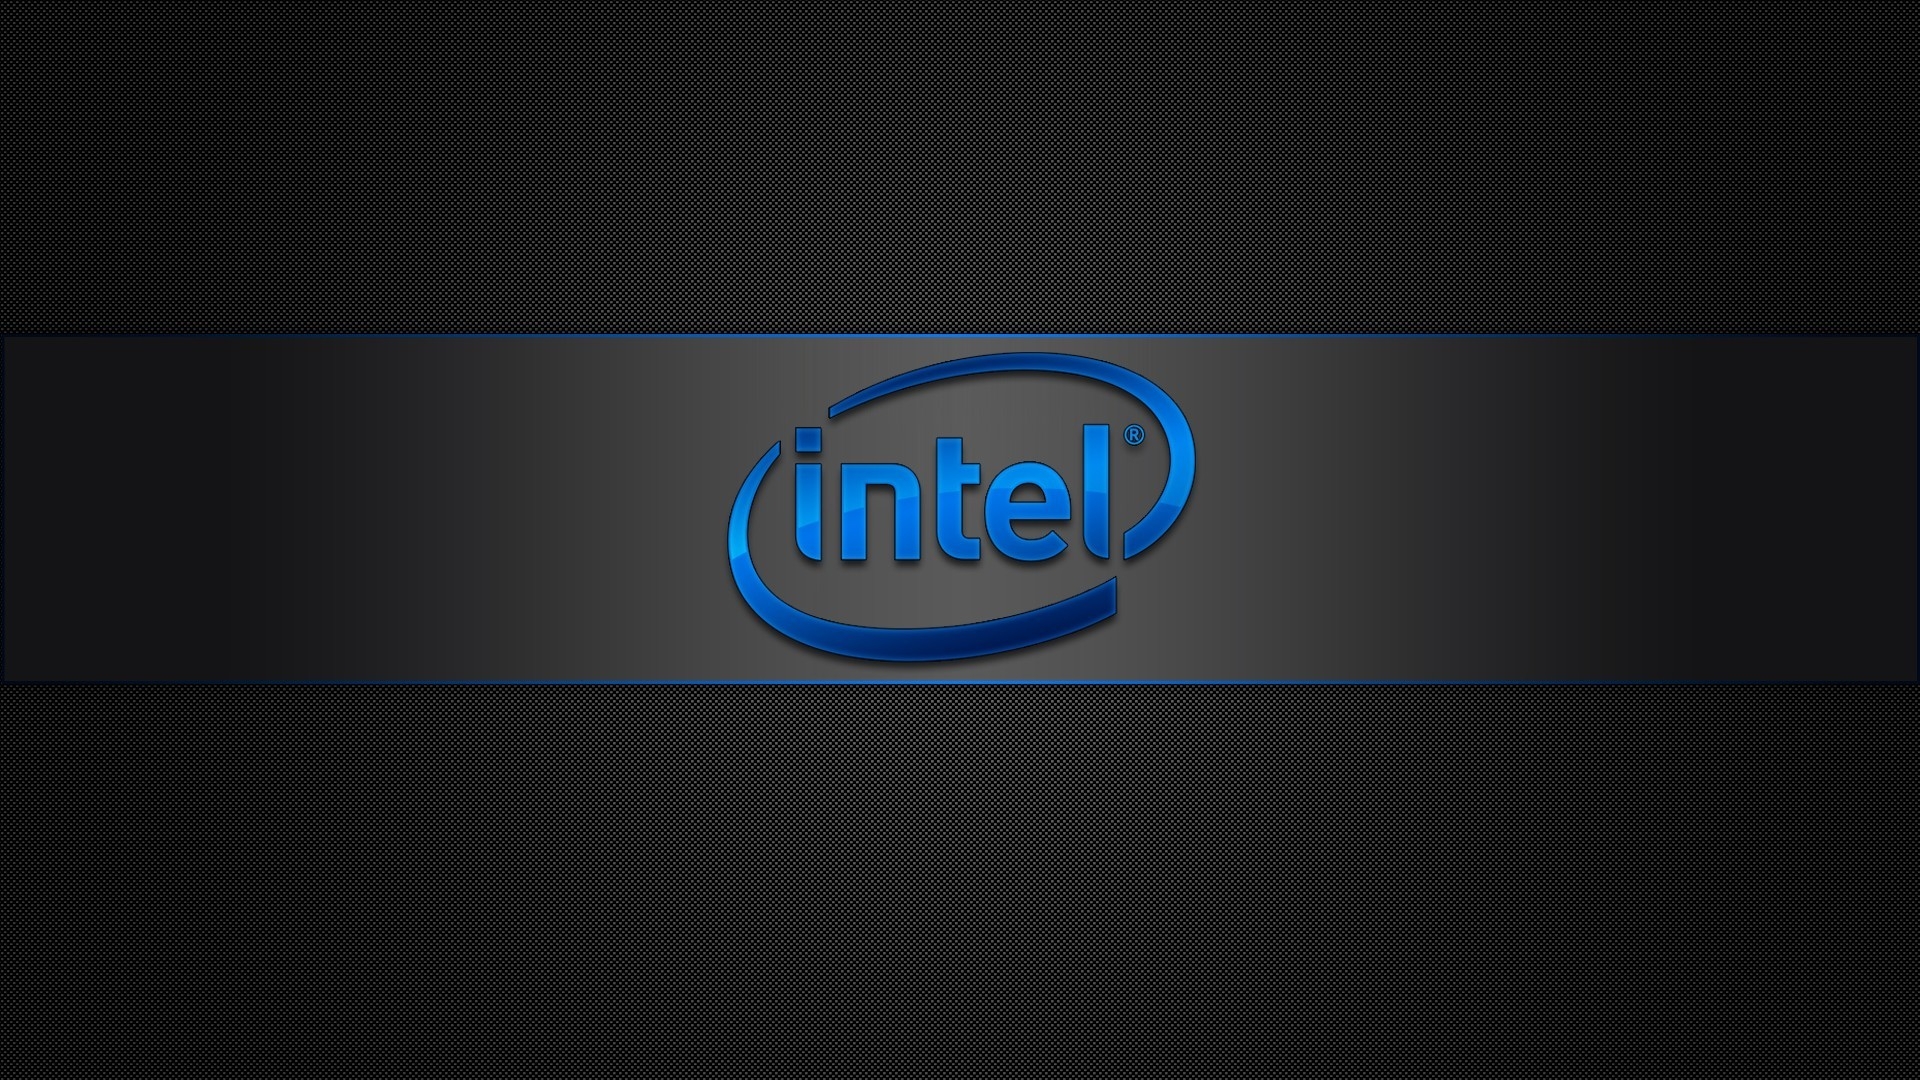 Intel for 1920 x 1080 HDTV 1080p resolution